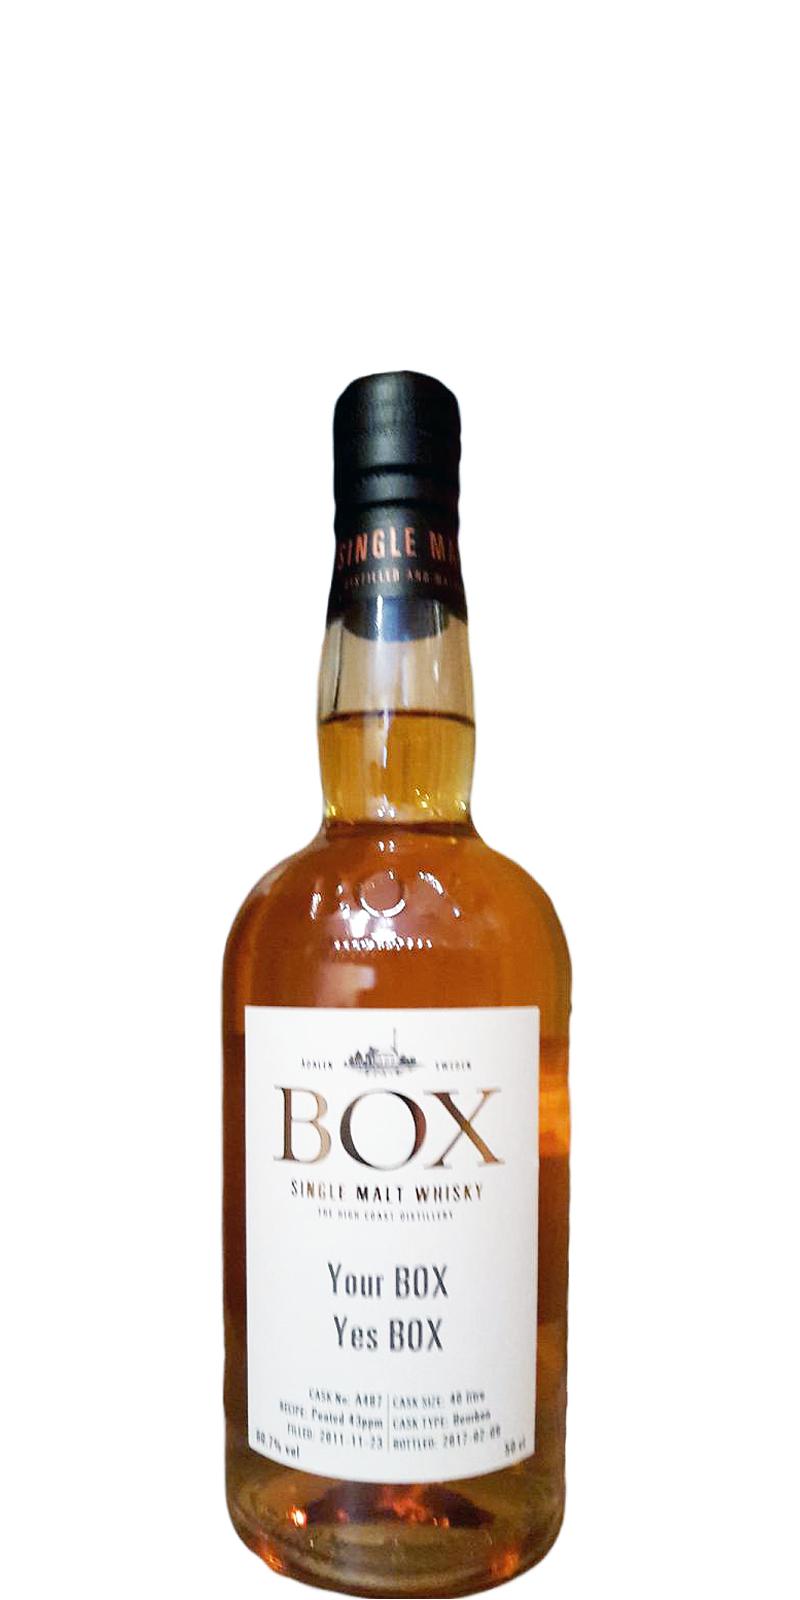 Box 2011 Your BOX Yes BOX Bourbon peated 43 ppm A487 PB Juhani Karvonen 60.7% 500ml